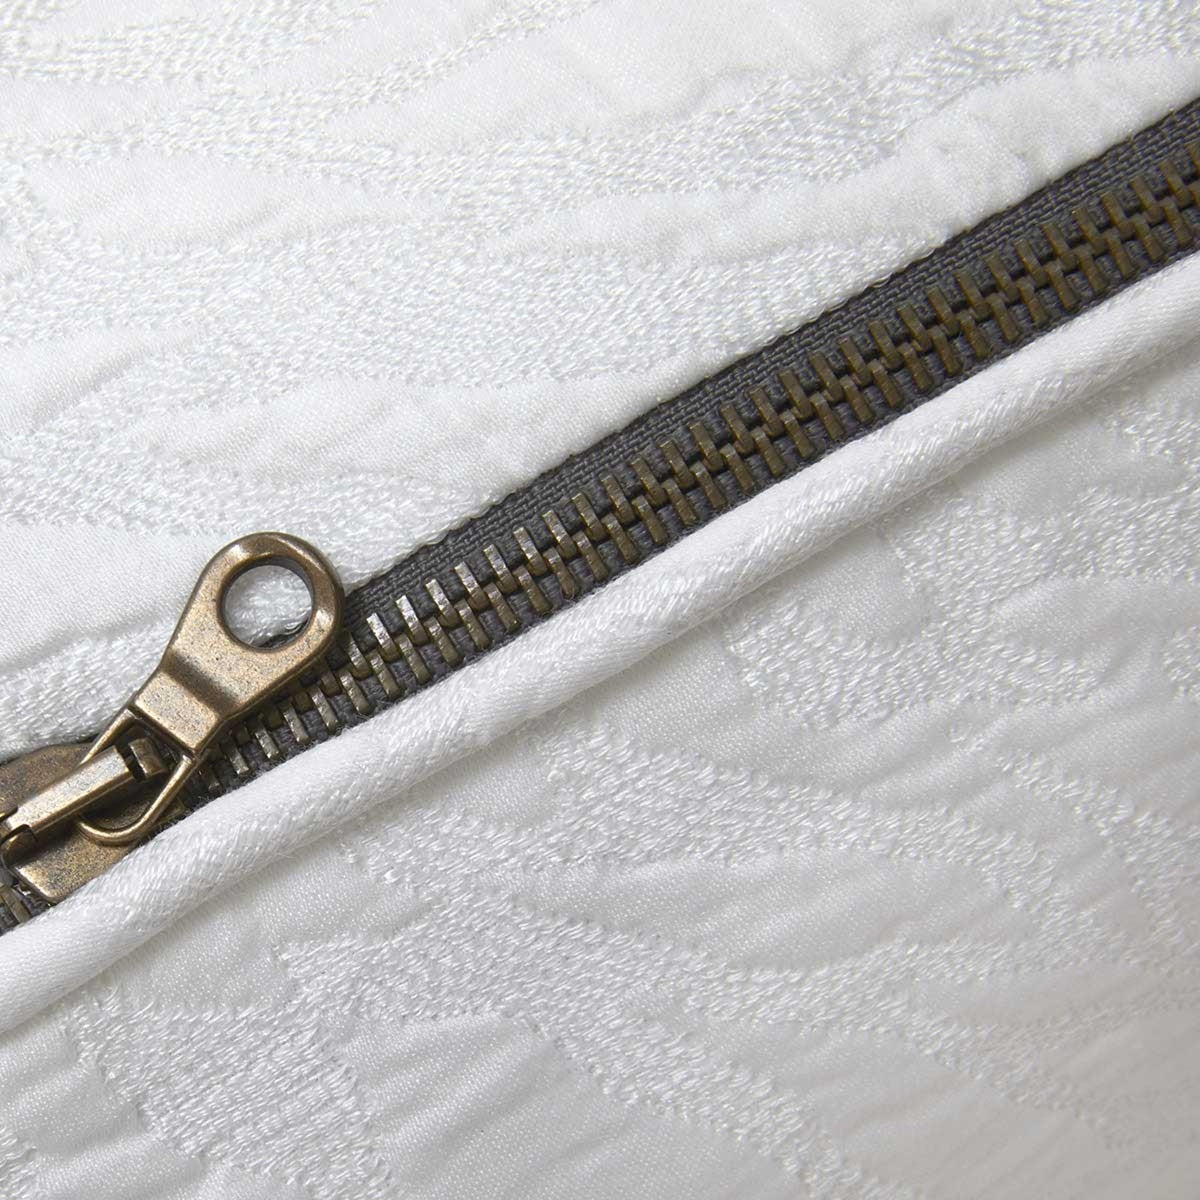 Zipper of Yves Delorme Souvenir Decorative Pillow in Blanc Color